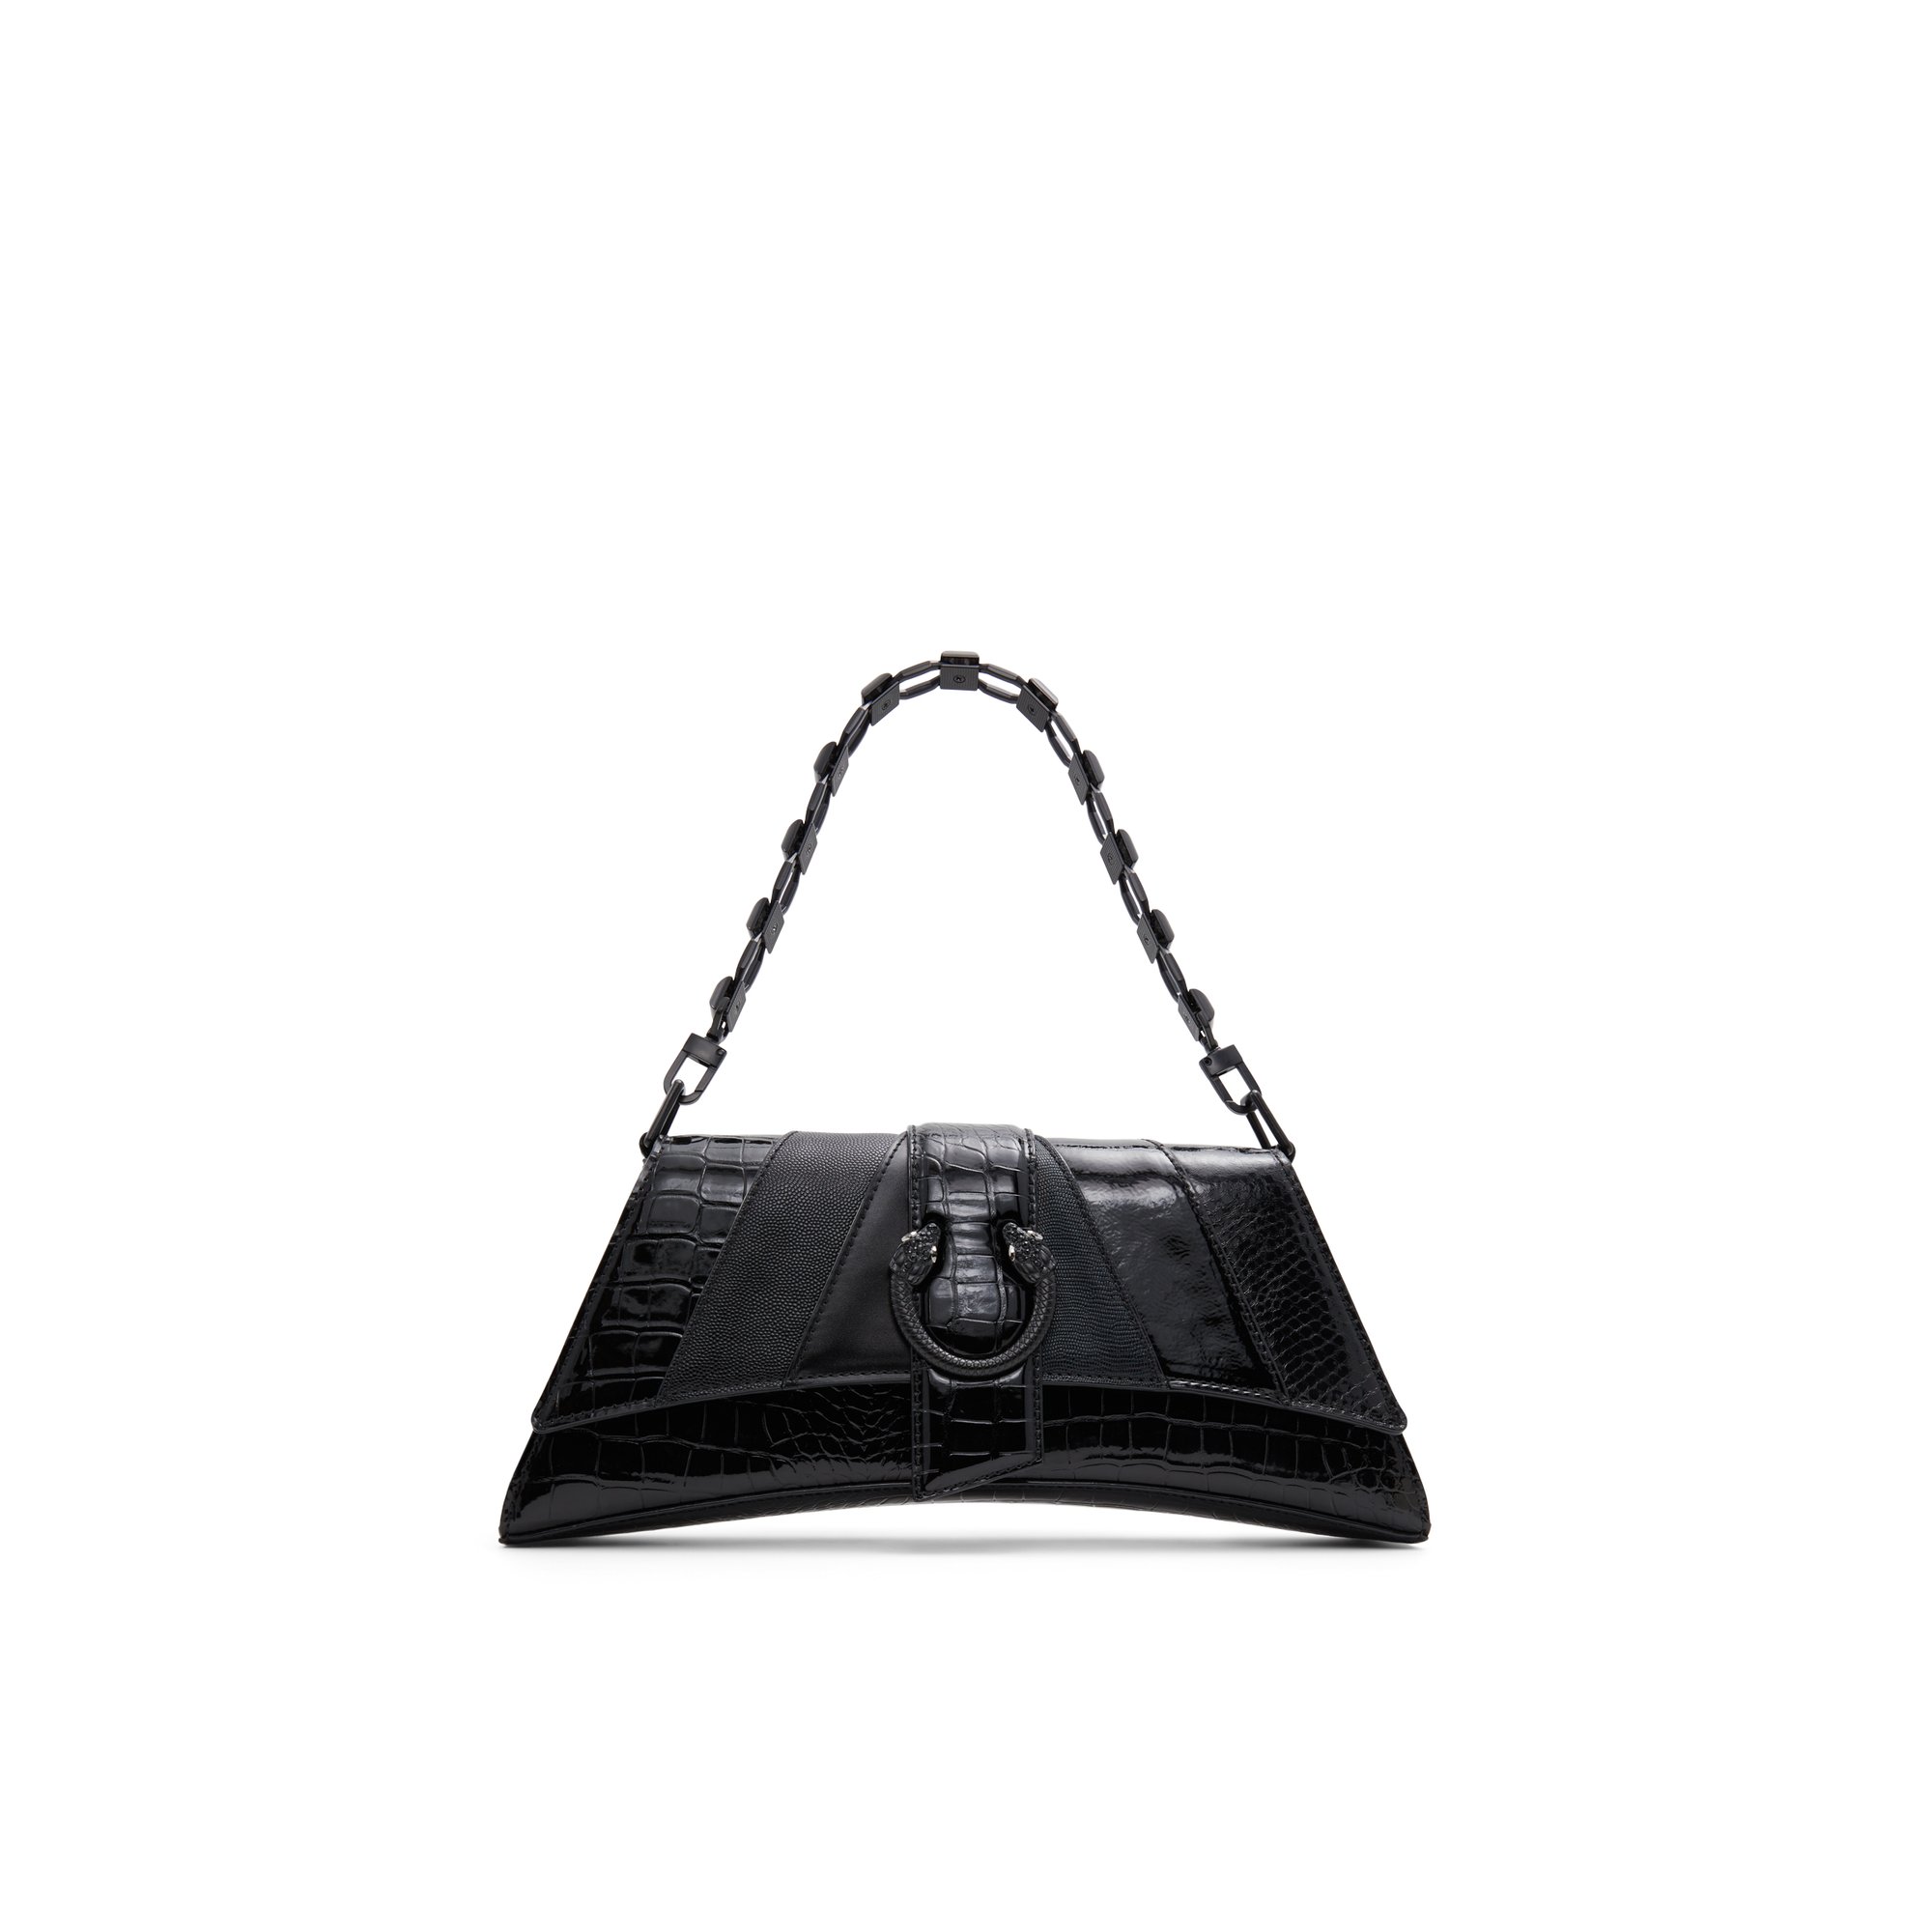 ALDO Scylla - Women's Shoulder Bag Handbag - Black